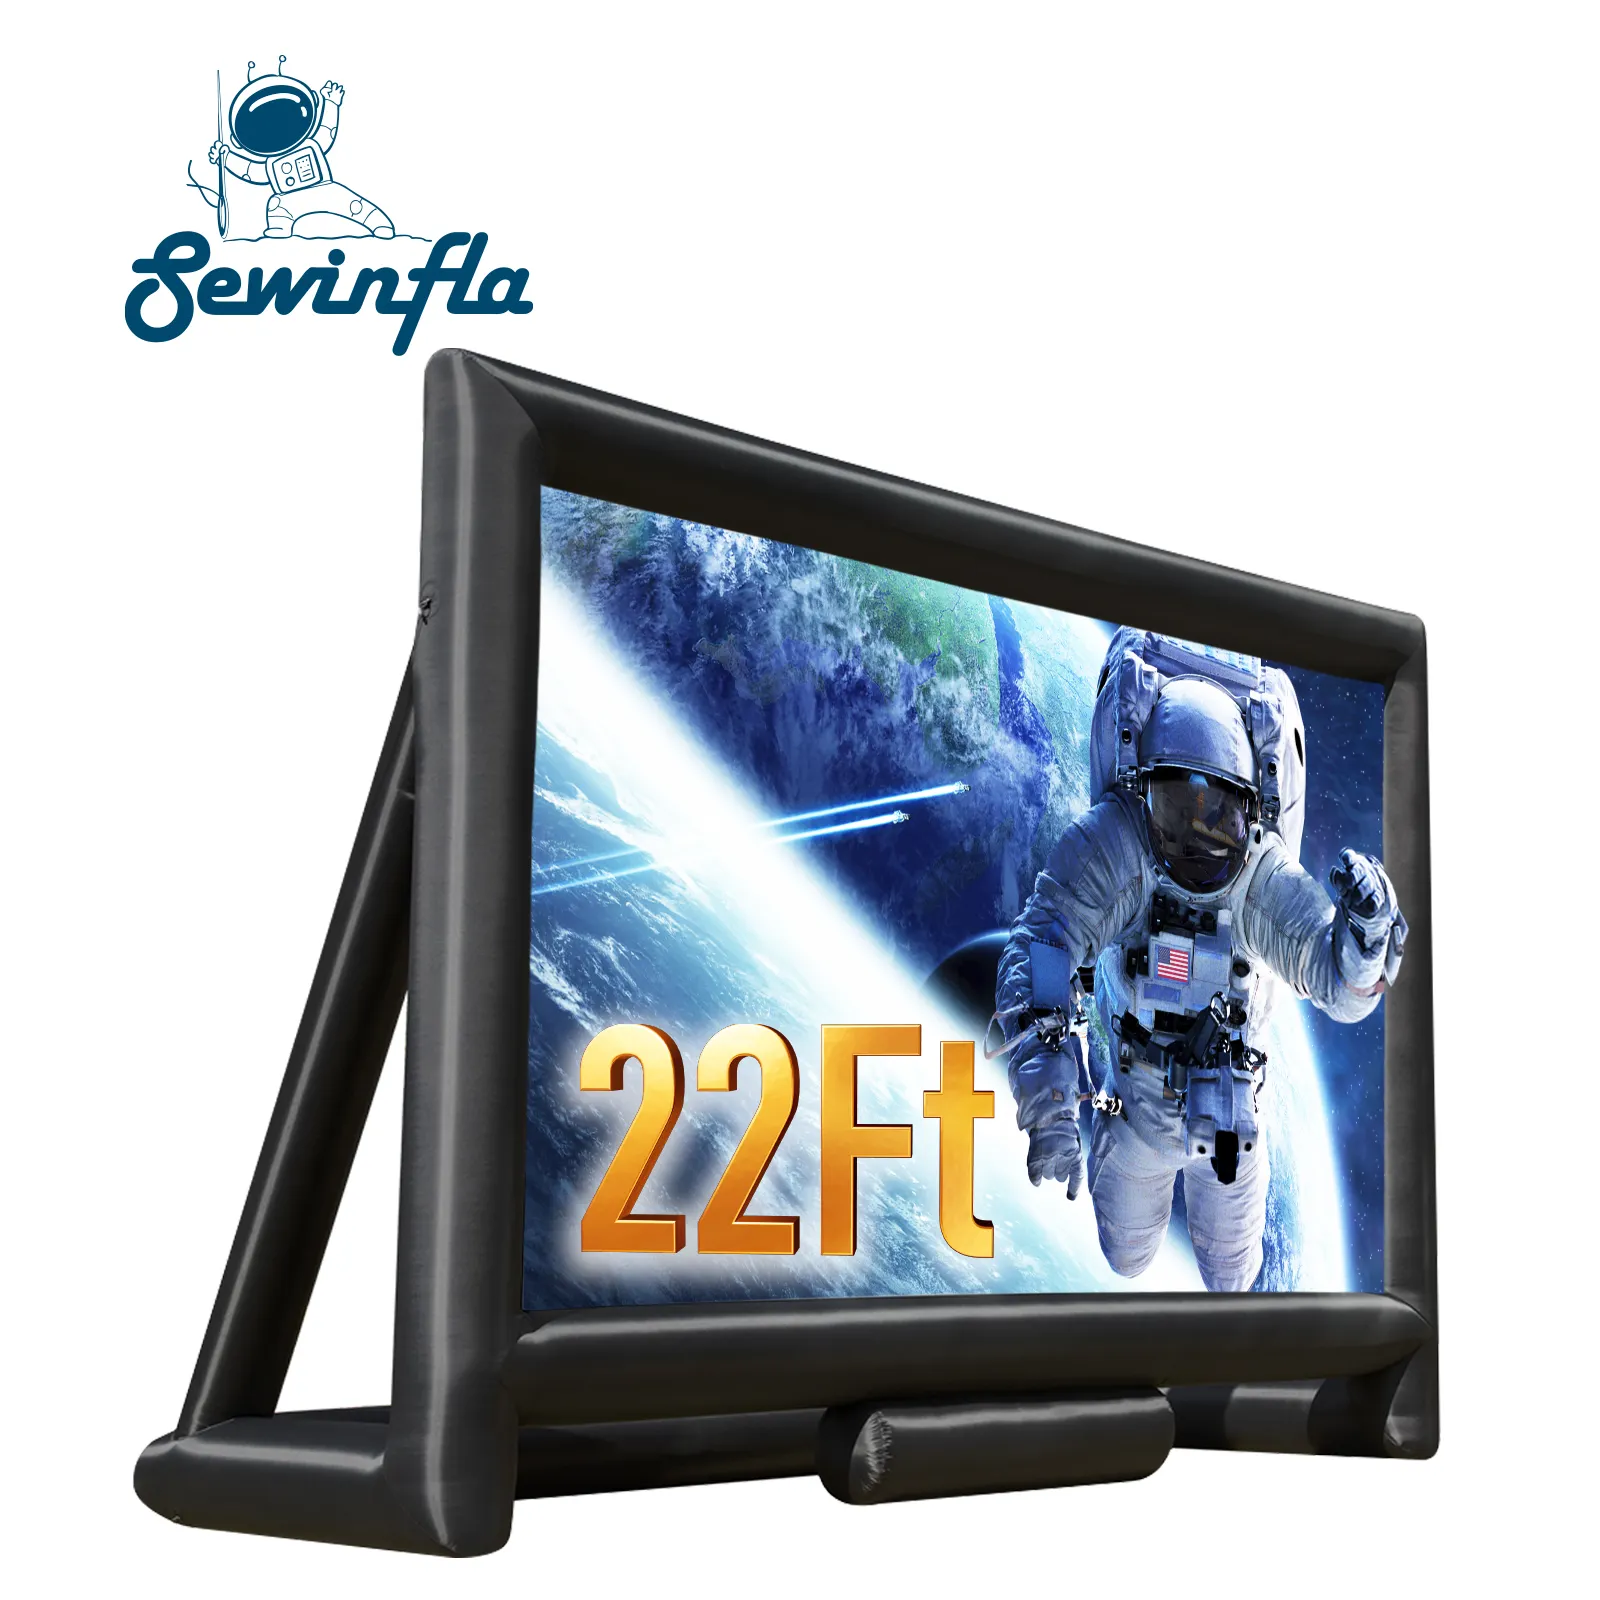 Sewinfla H otsale 22ft надувной ТВ-экран для кинотеатра